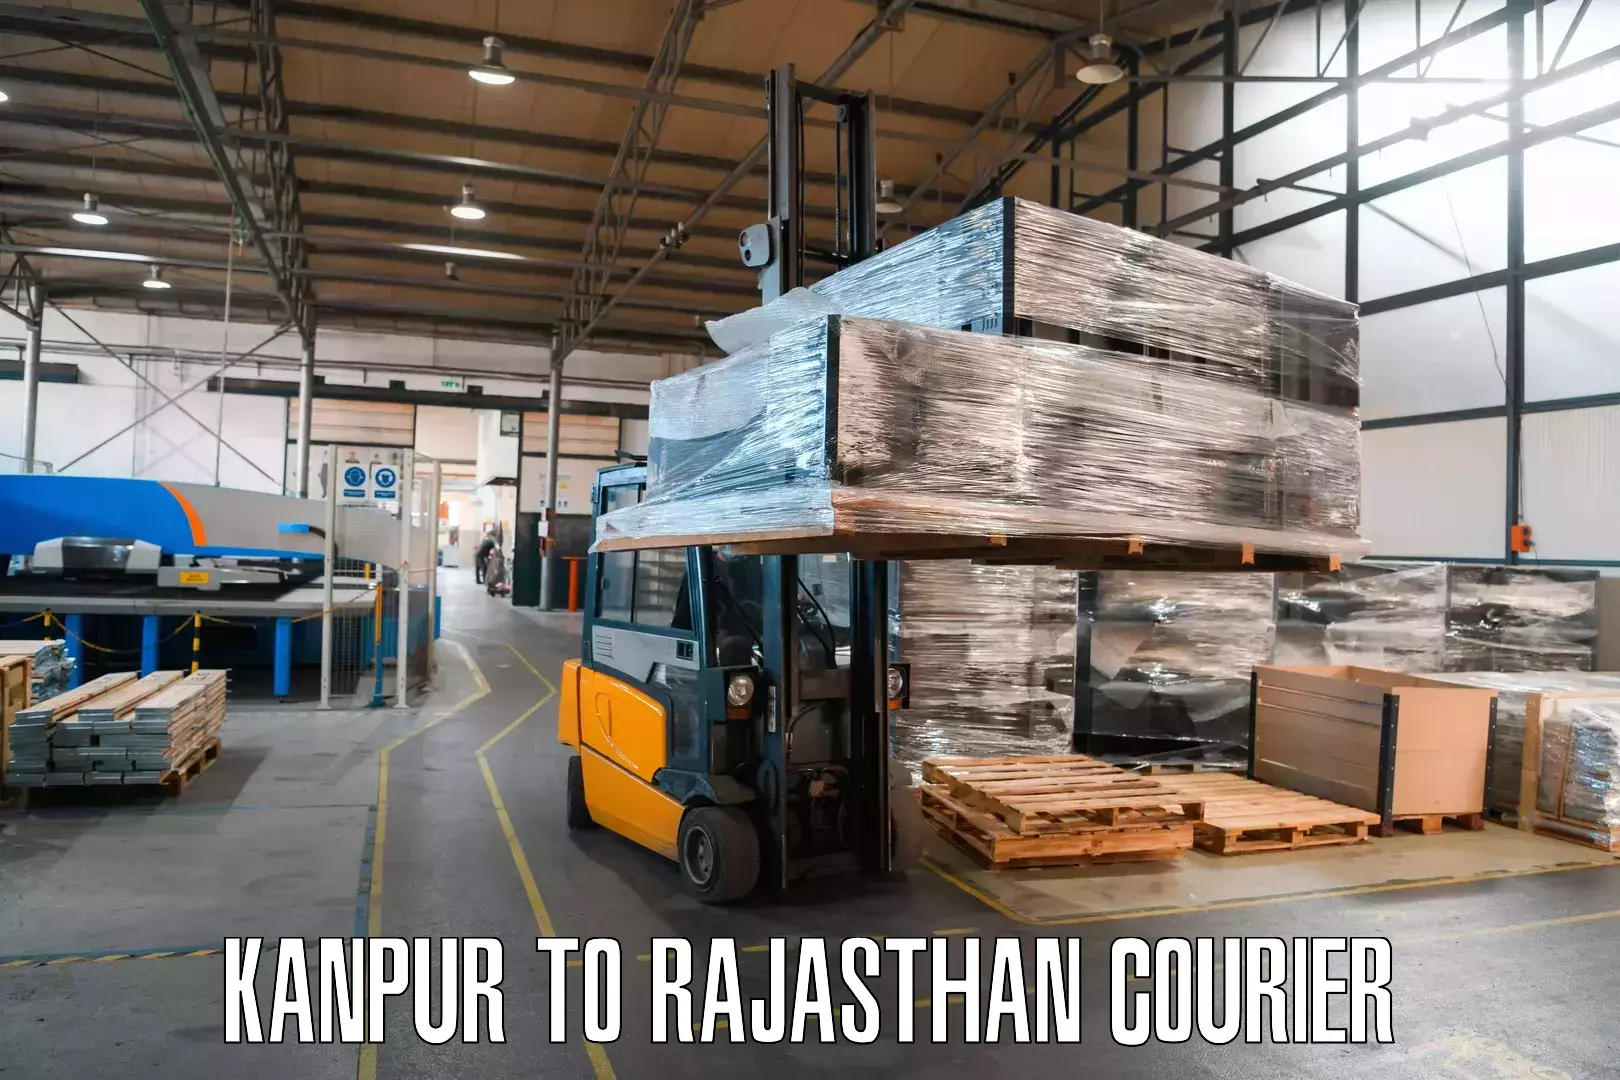 Courier service booking Kanpur to Jhunjhunu